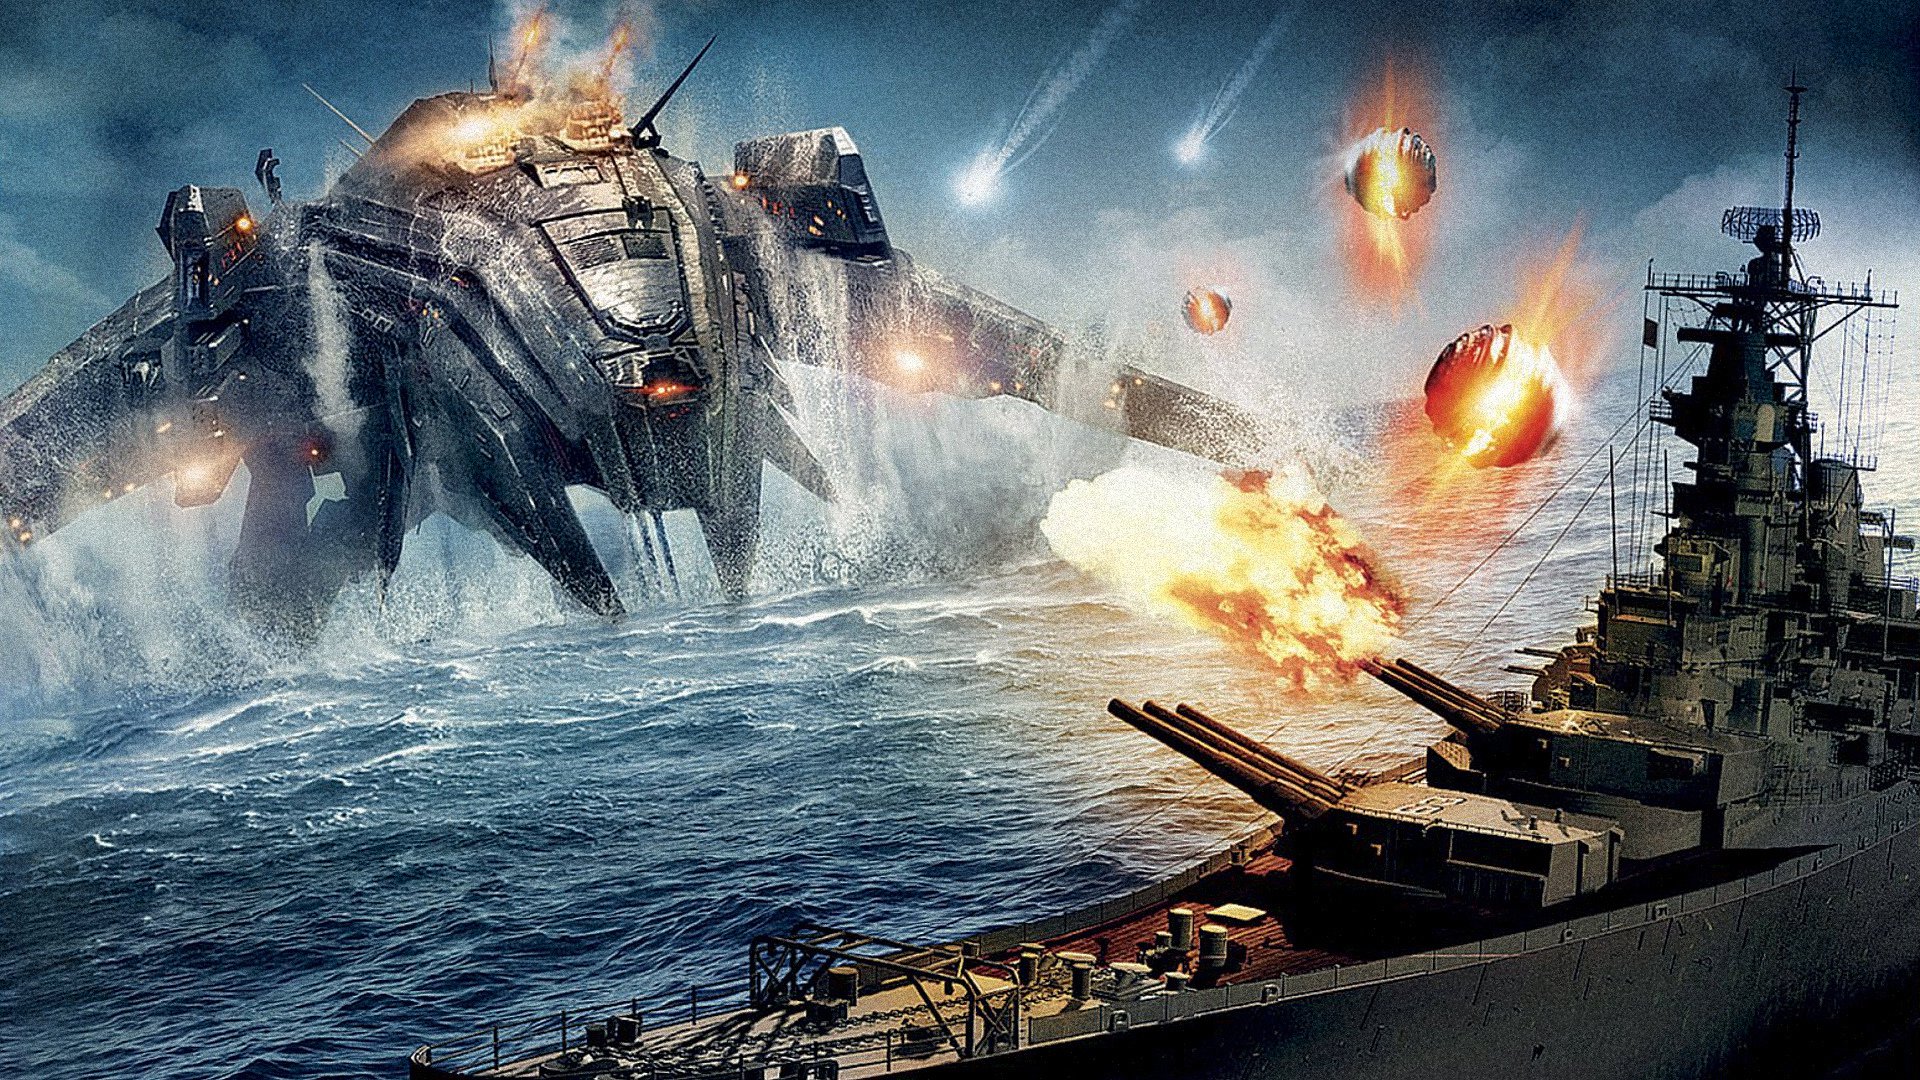 Battleship Computer Wallpapers Desktop Backgrounds